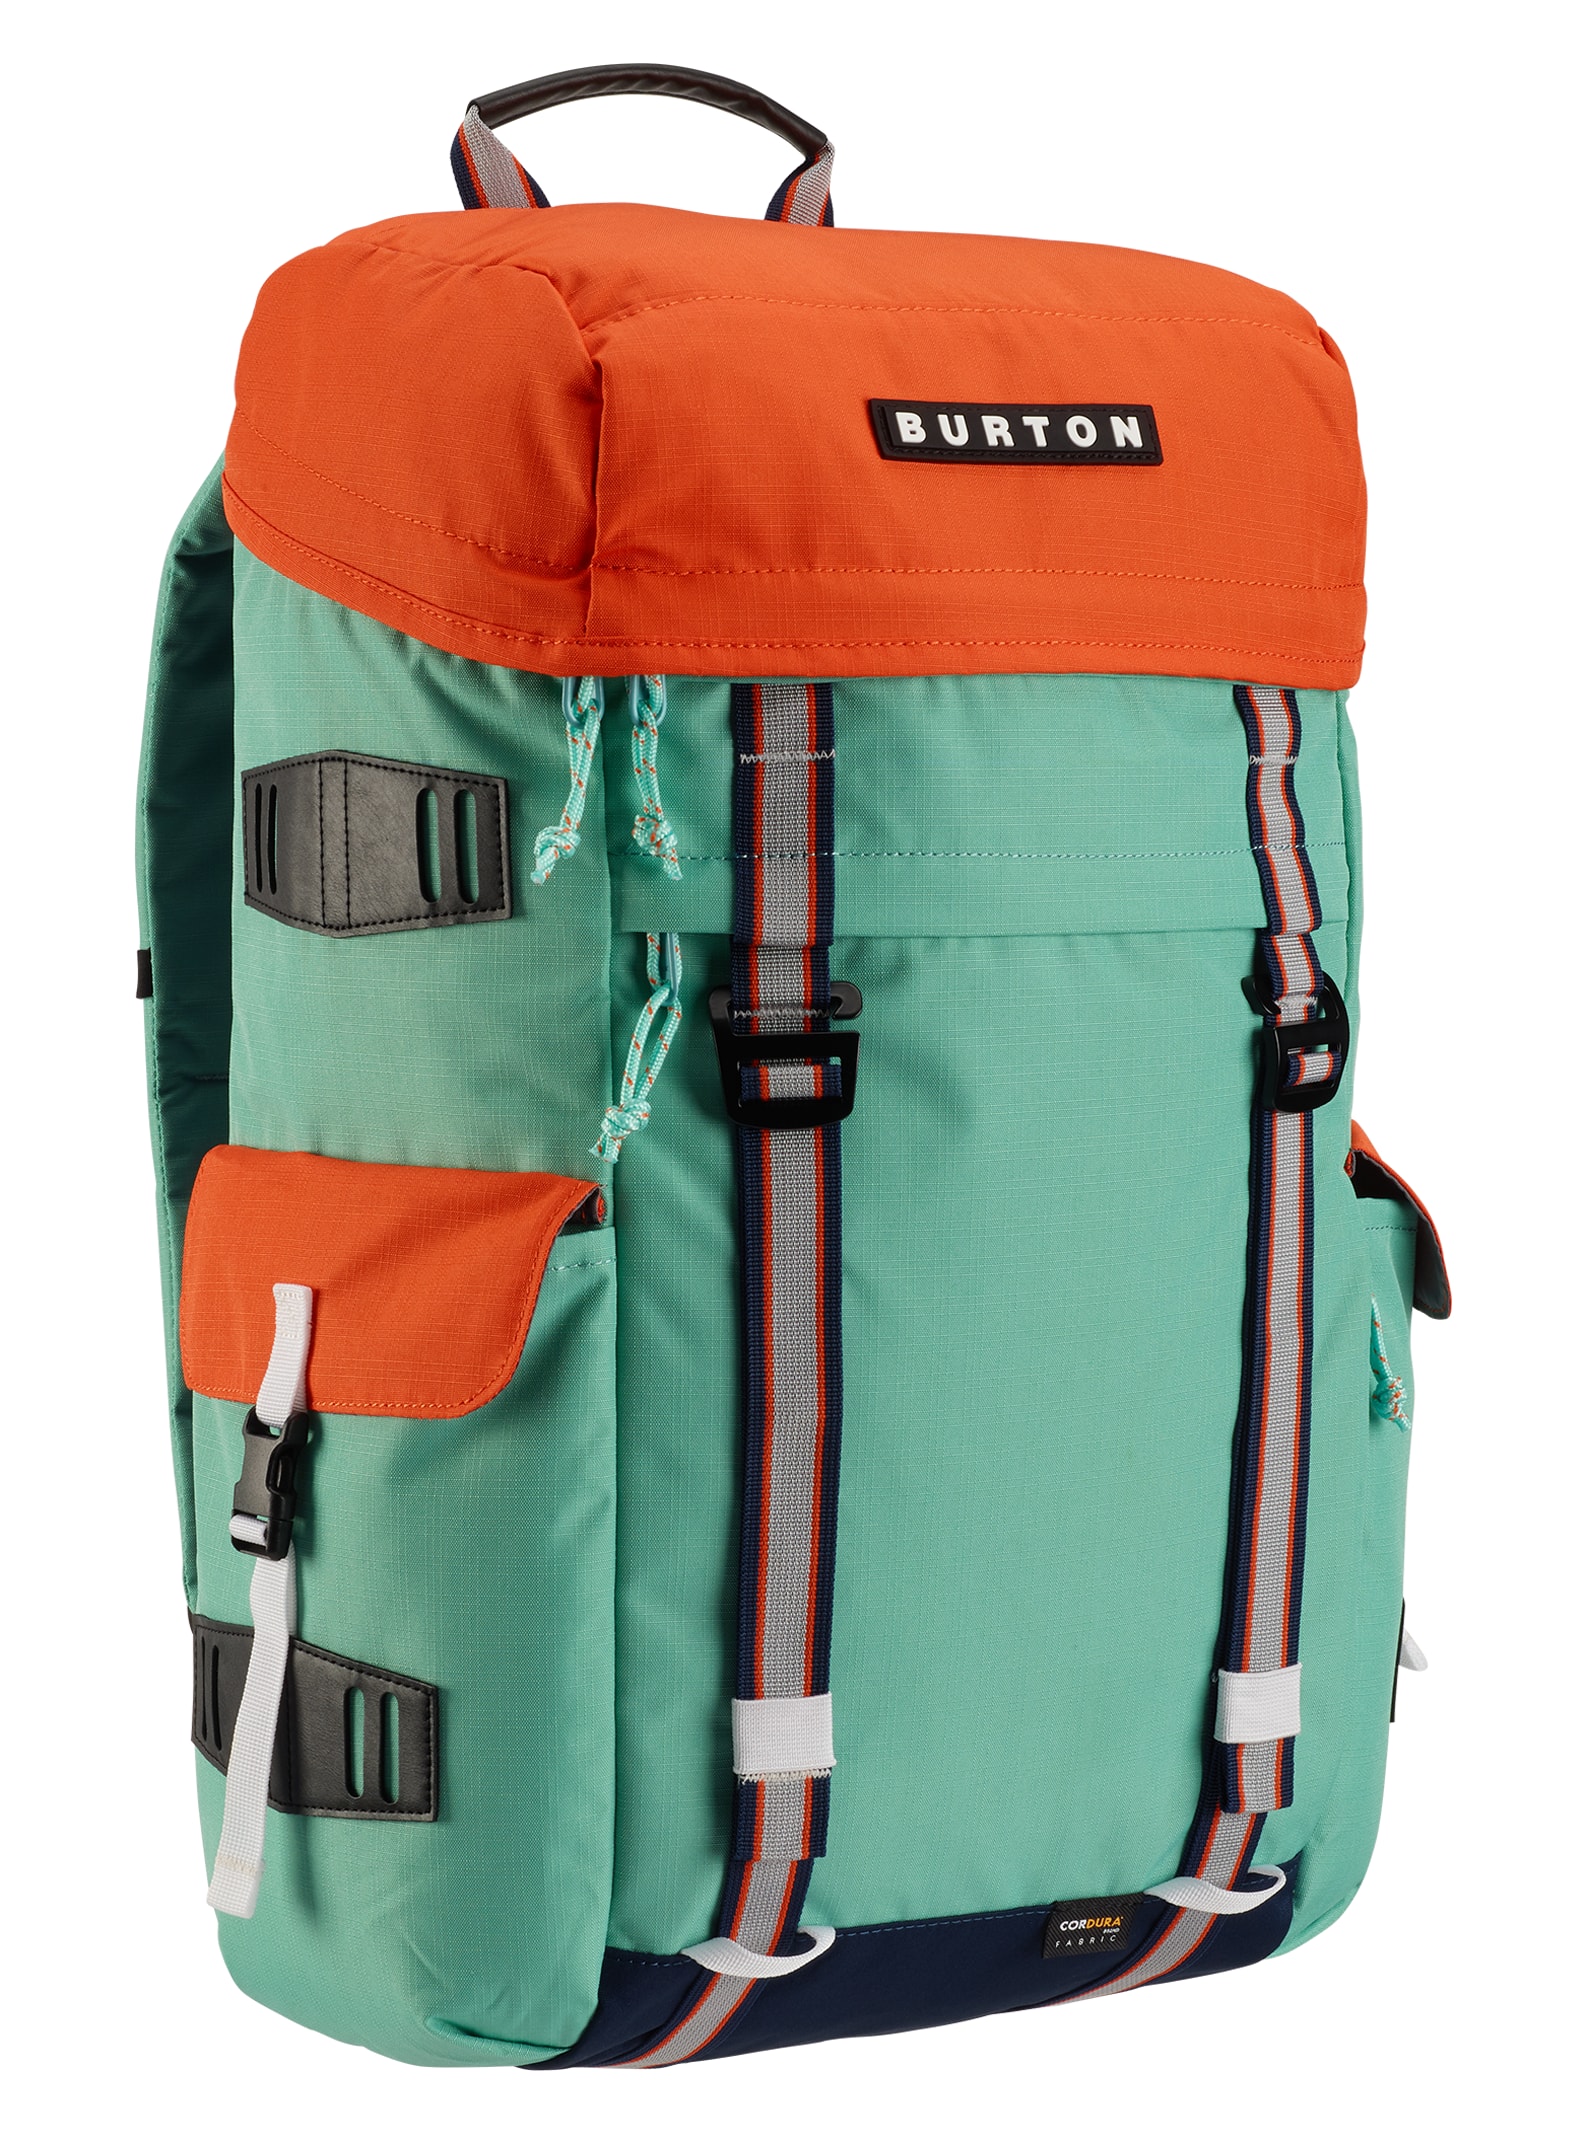 Burton Annex 28L Backpack | Burton.com Spring 2020 US